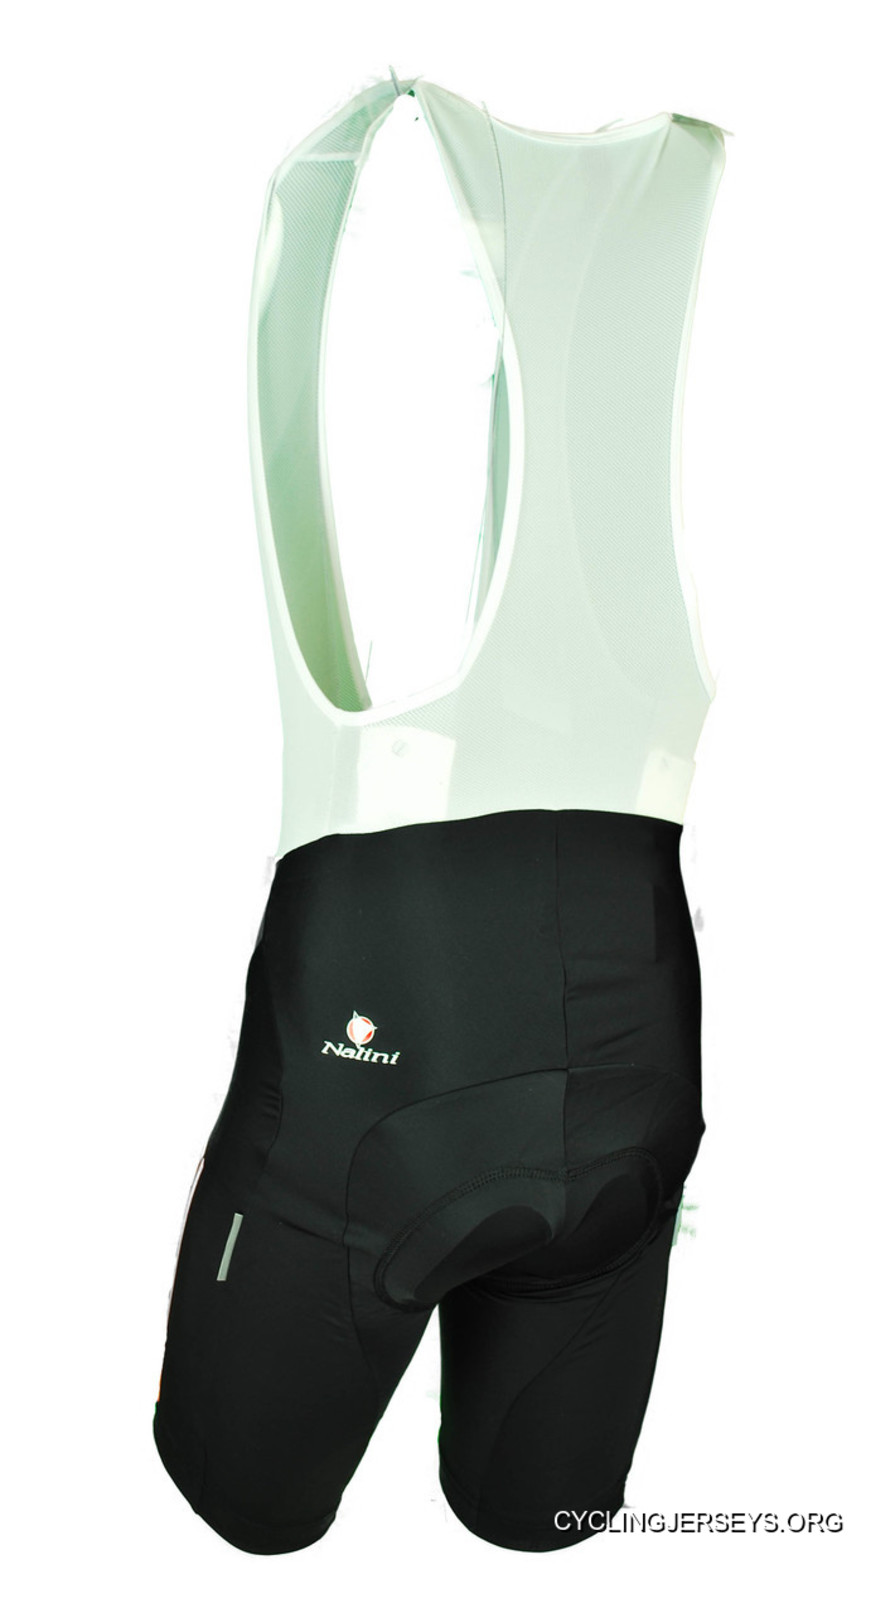 Nalini Road Cycling Green Black Bib Shorts Authentic